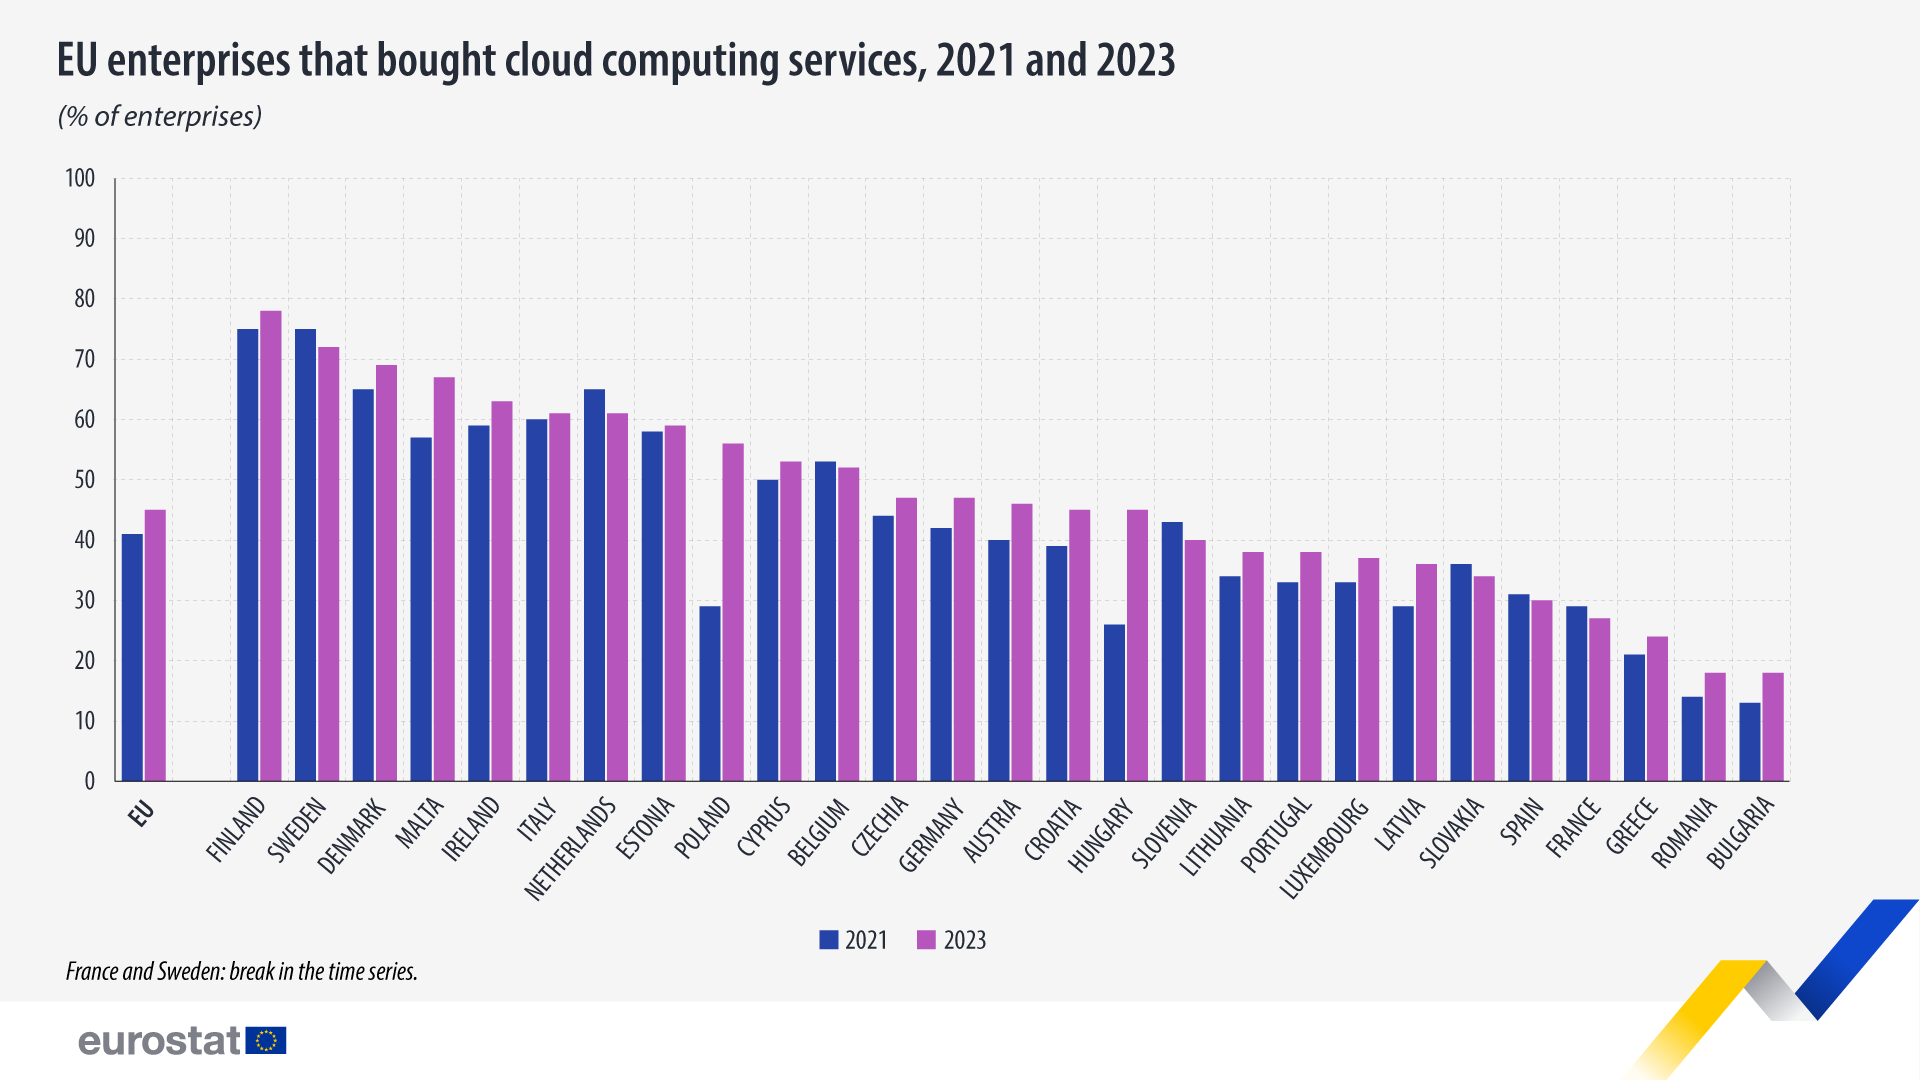 EU enterprises that bought cloud computing services in 2021 and 2023, % of enterprises